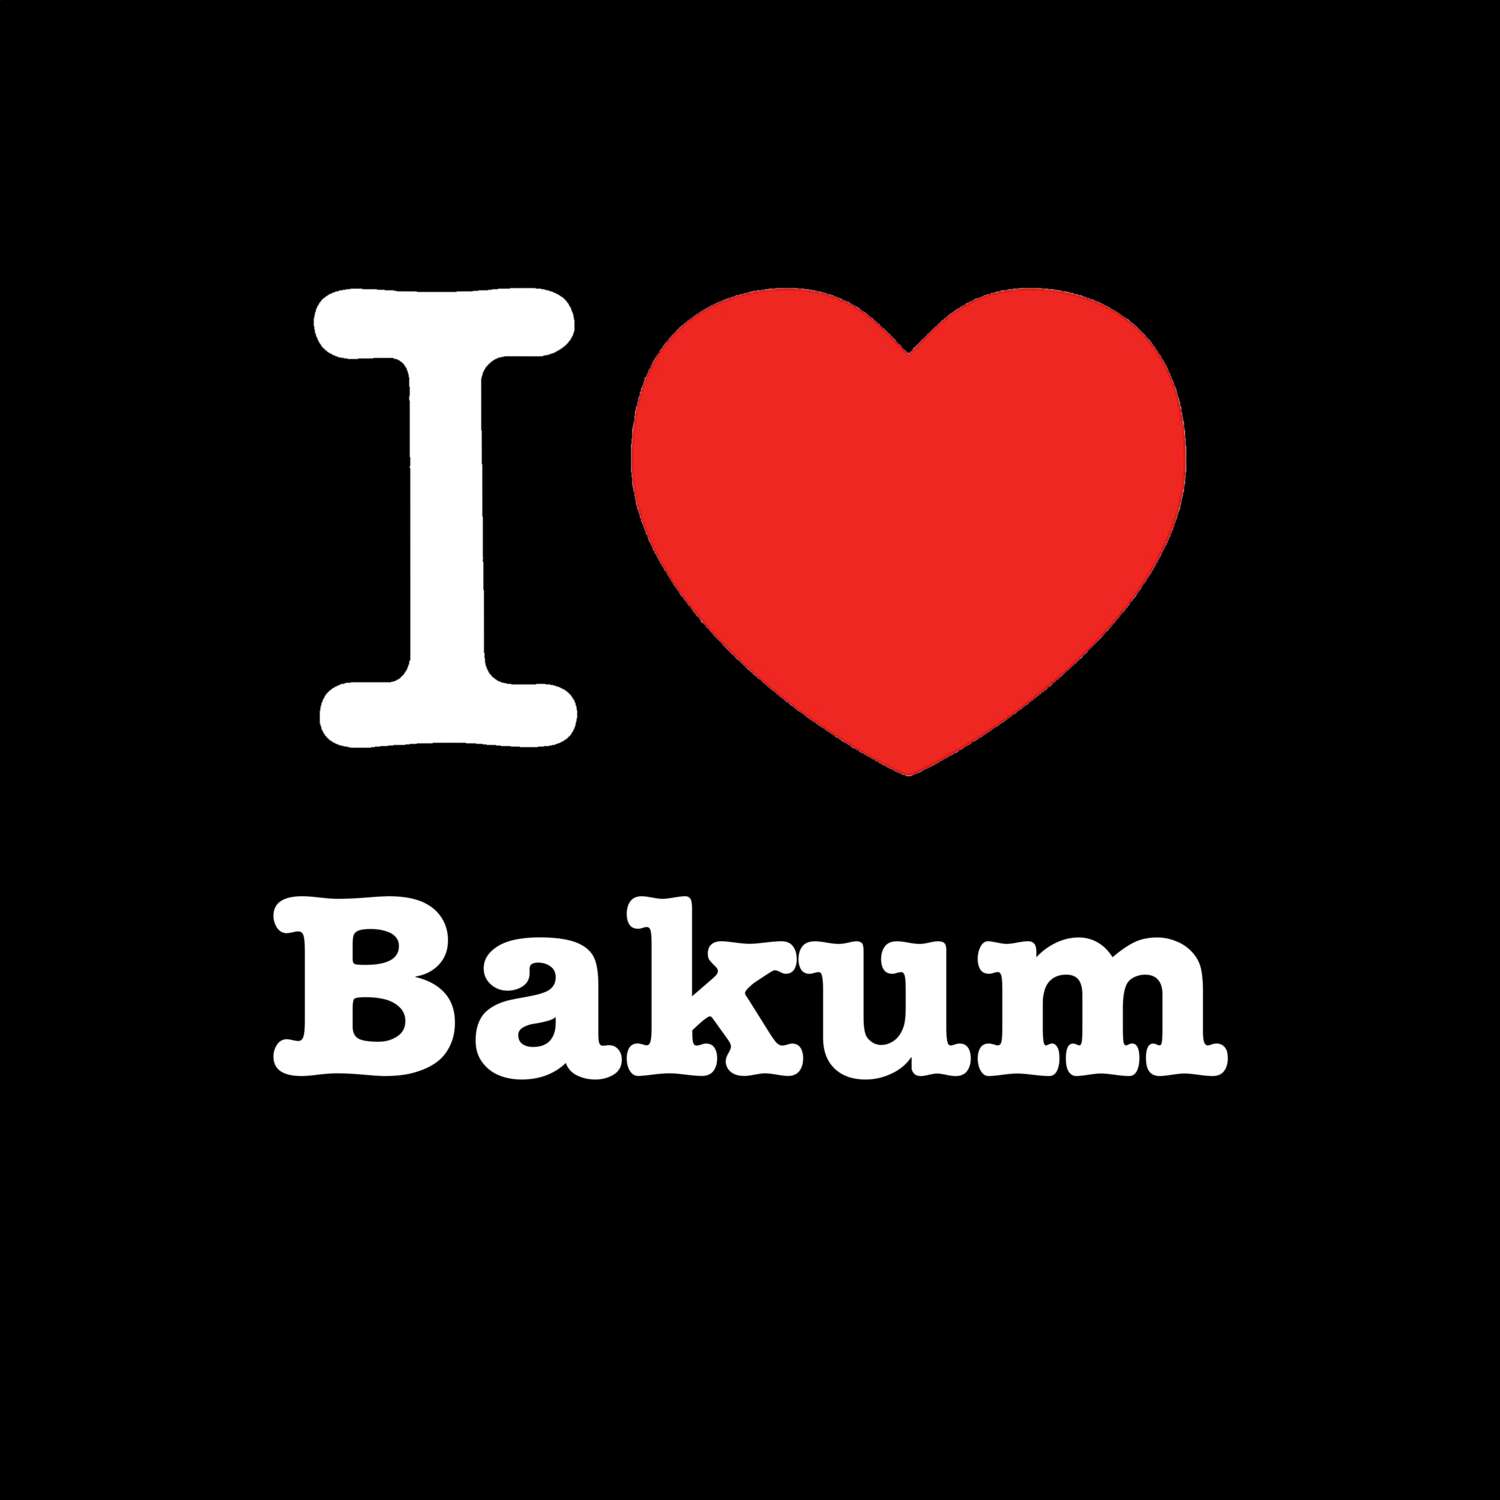 Bakum T-Shirt »I love«